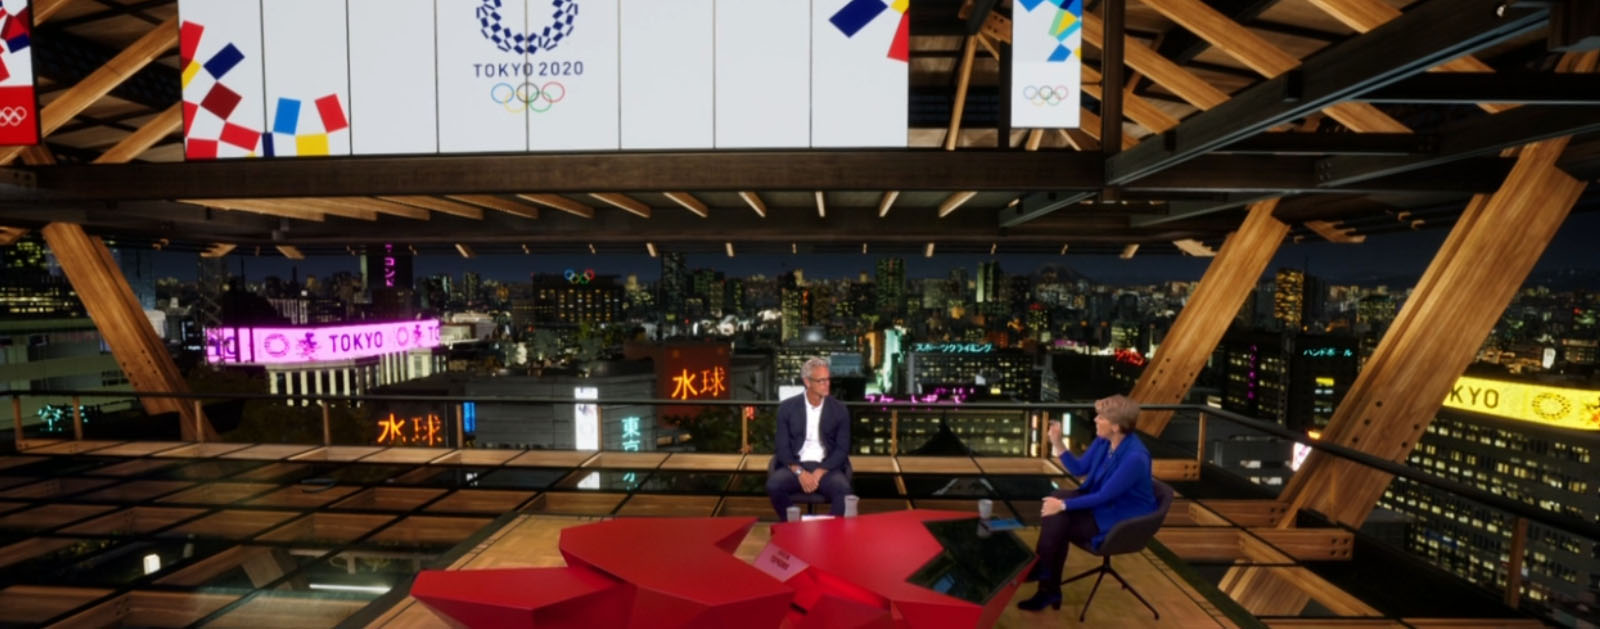  Tokyo 2020 Olympics Virtual Set Design for BBC Sport